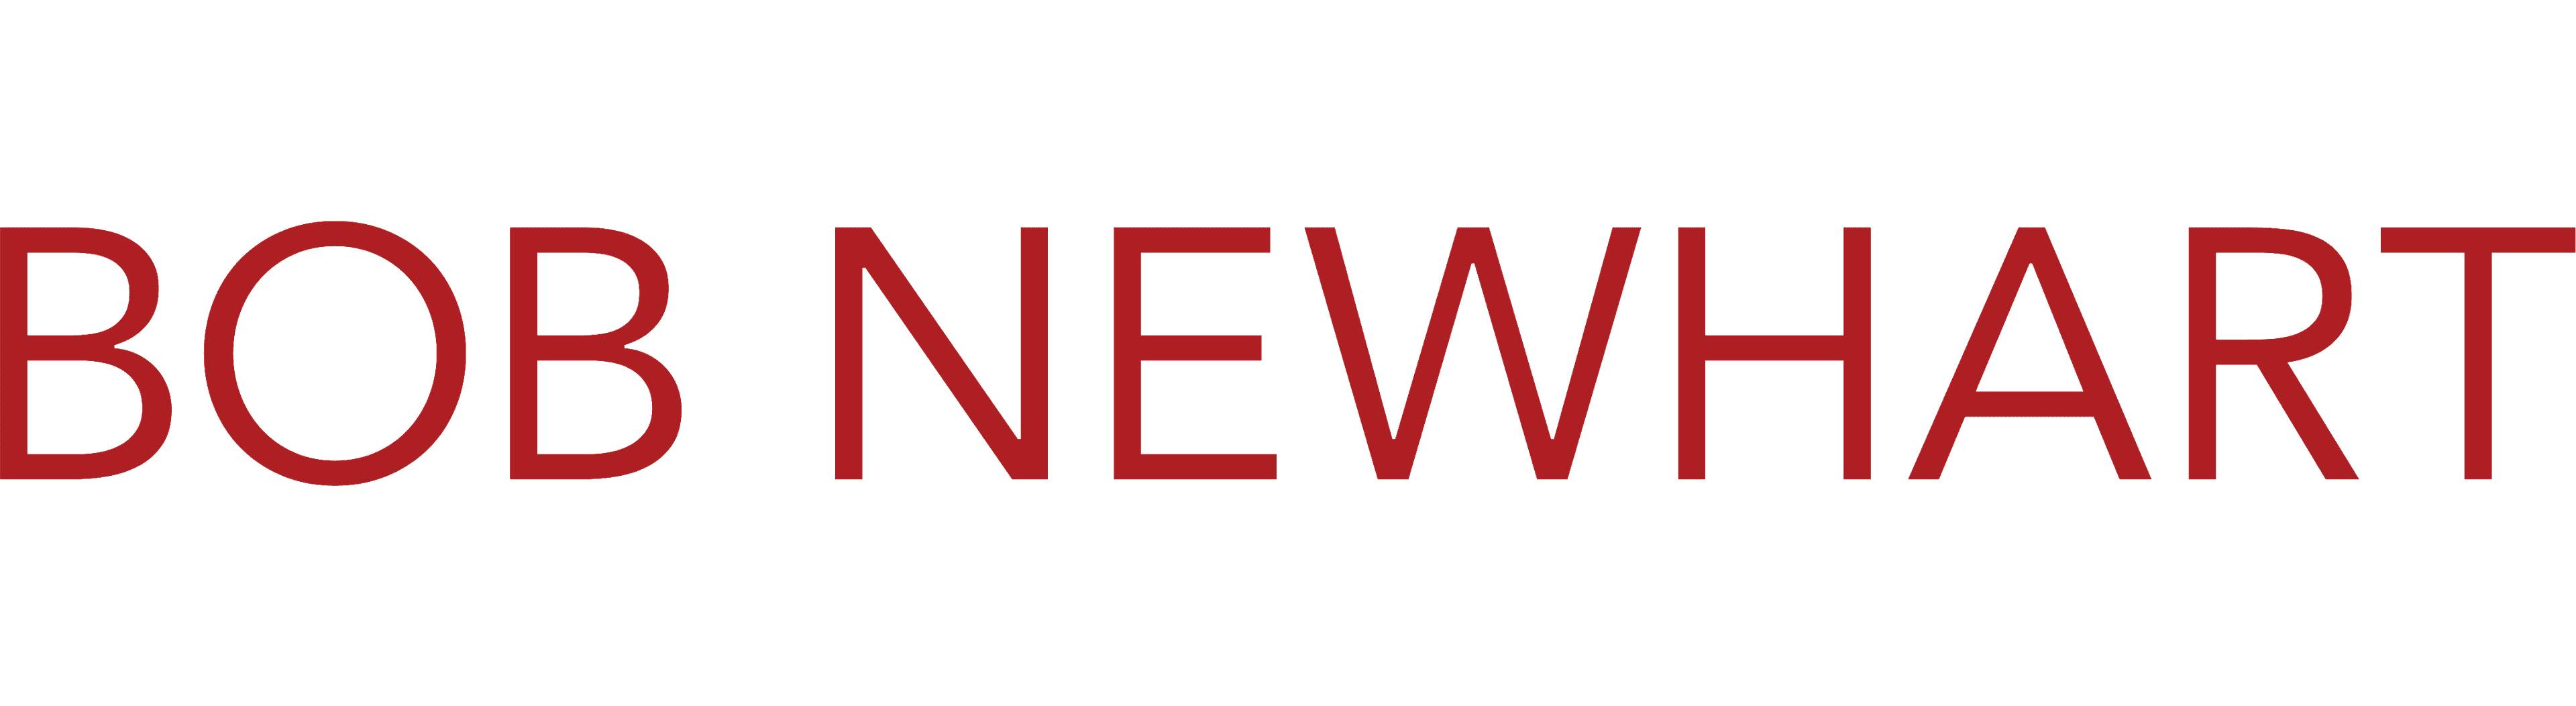 The Bob Newhart Show logo